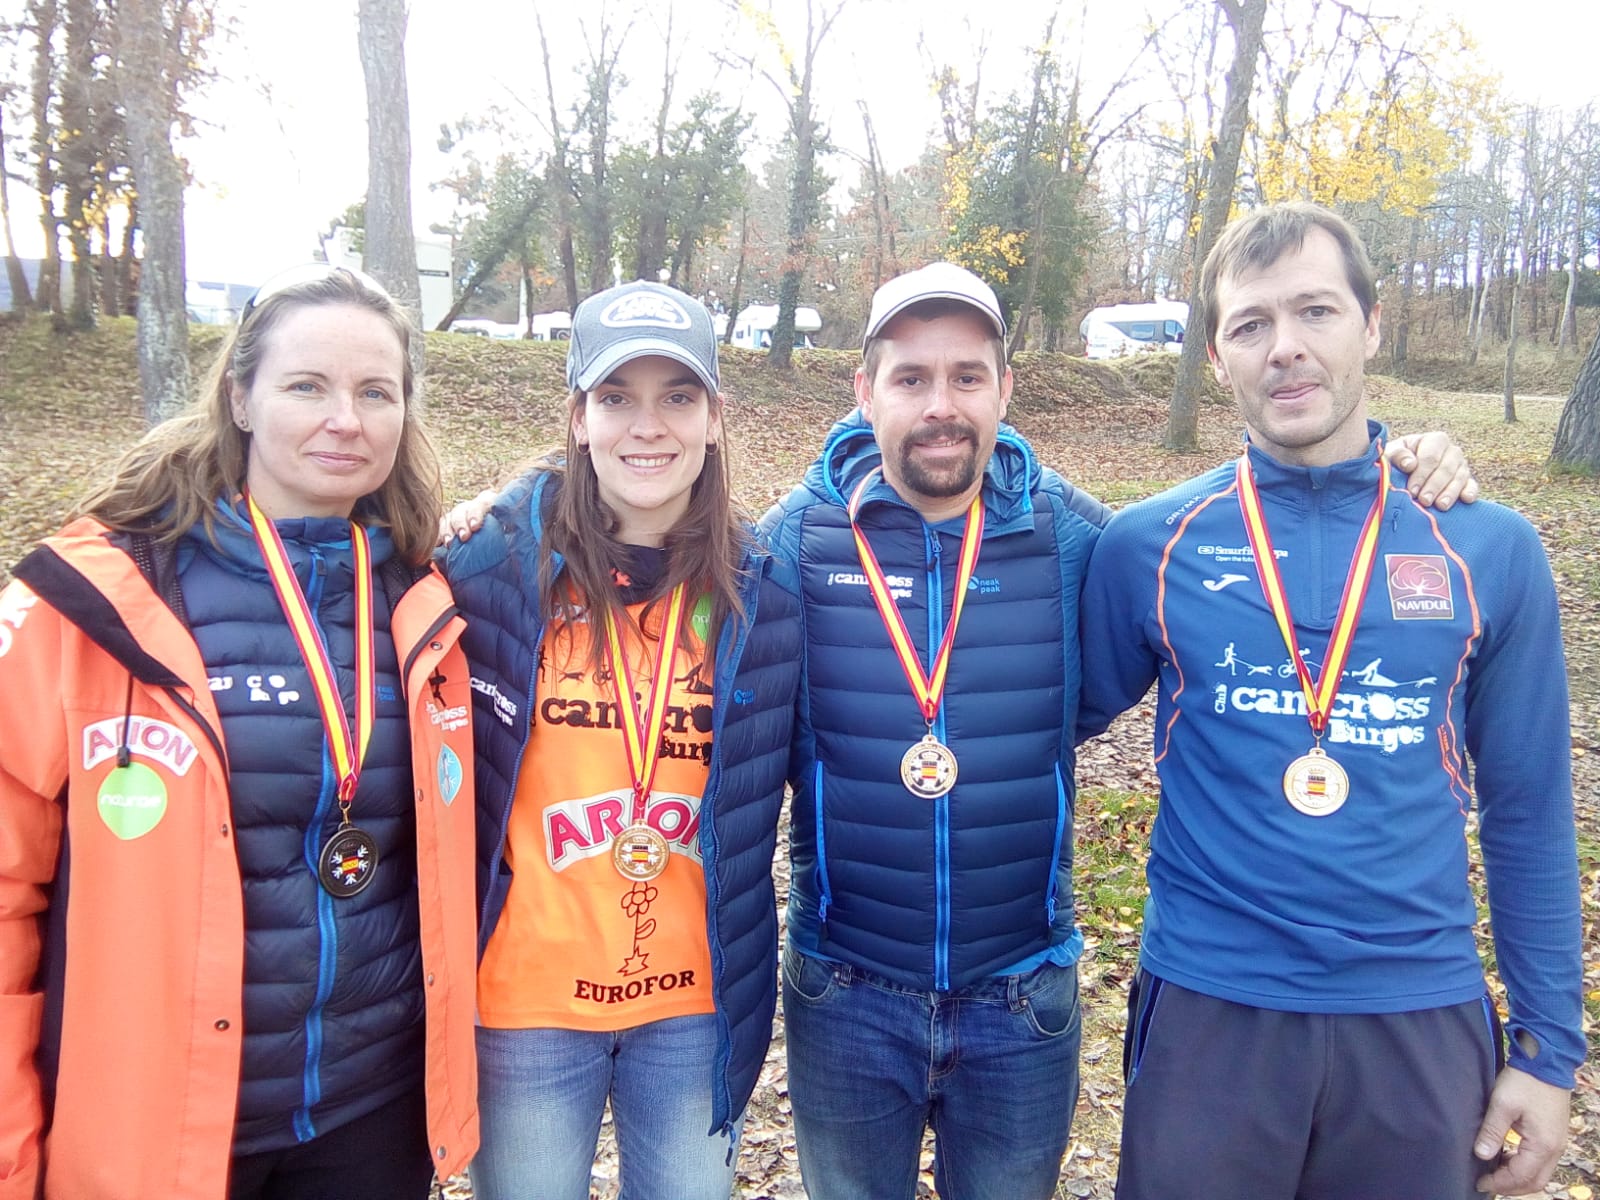 4 medallas del Club Canicross Burgos